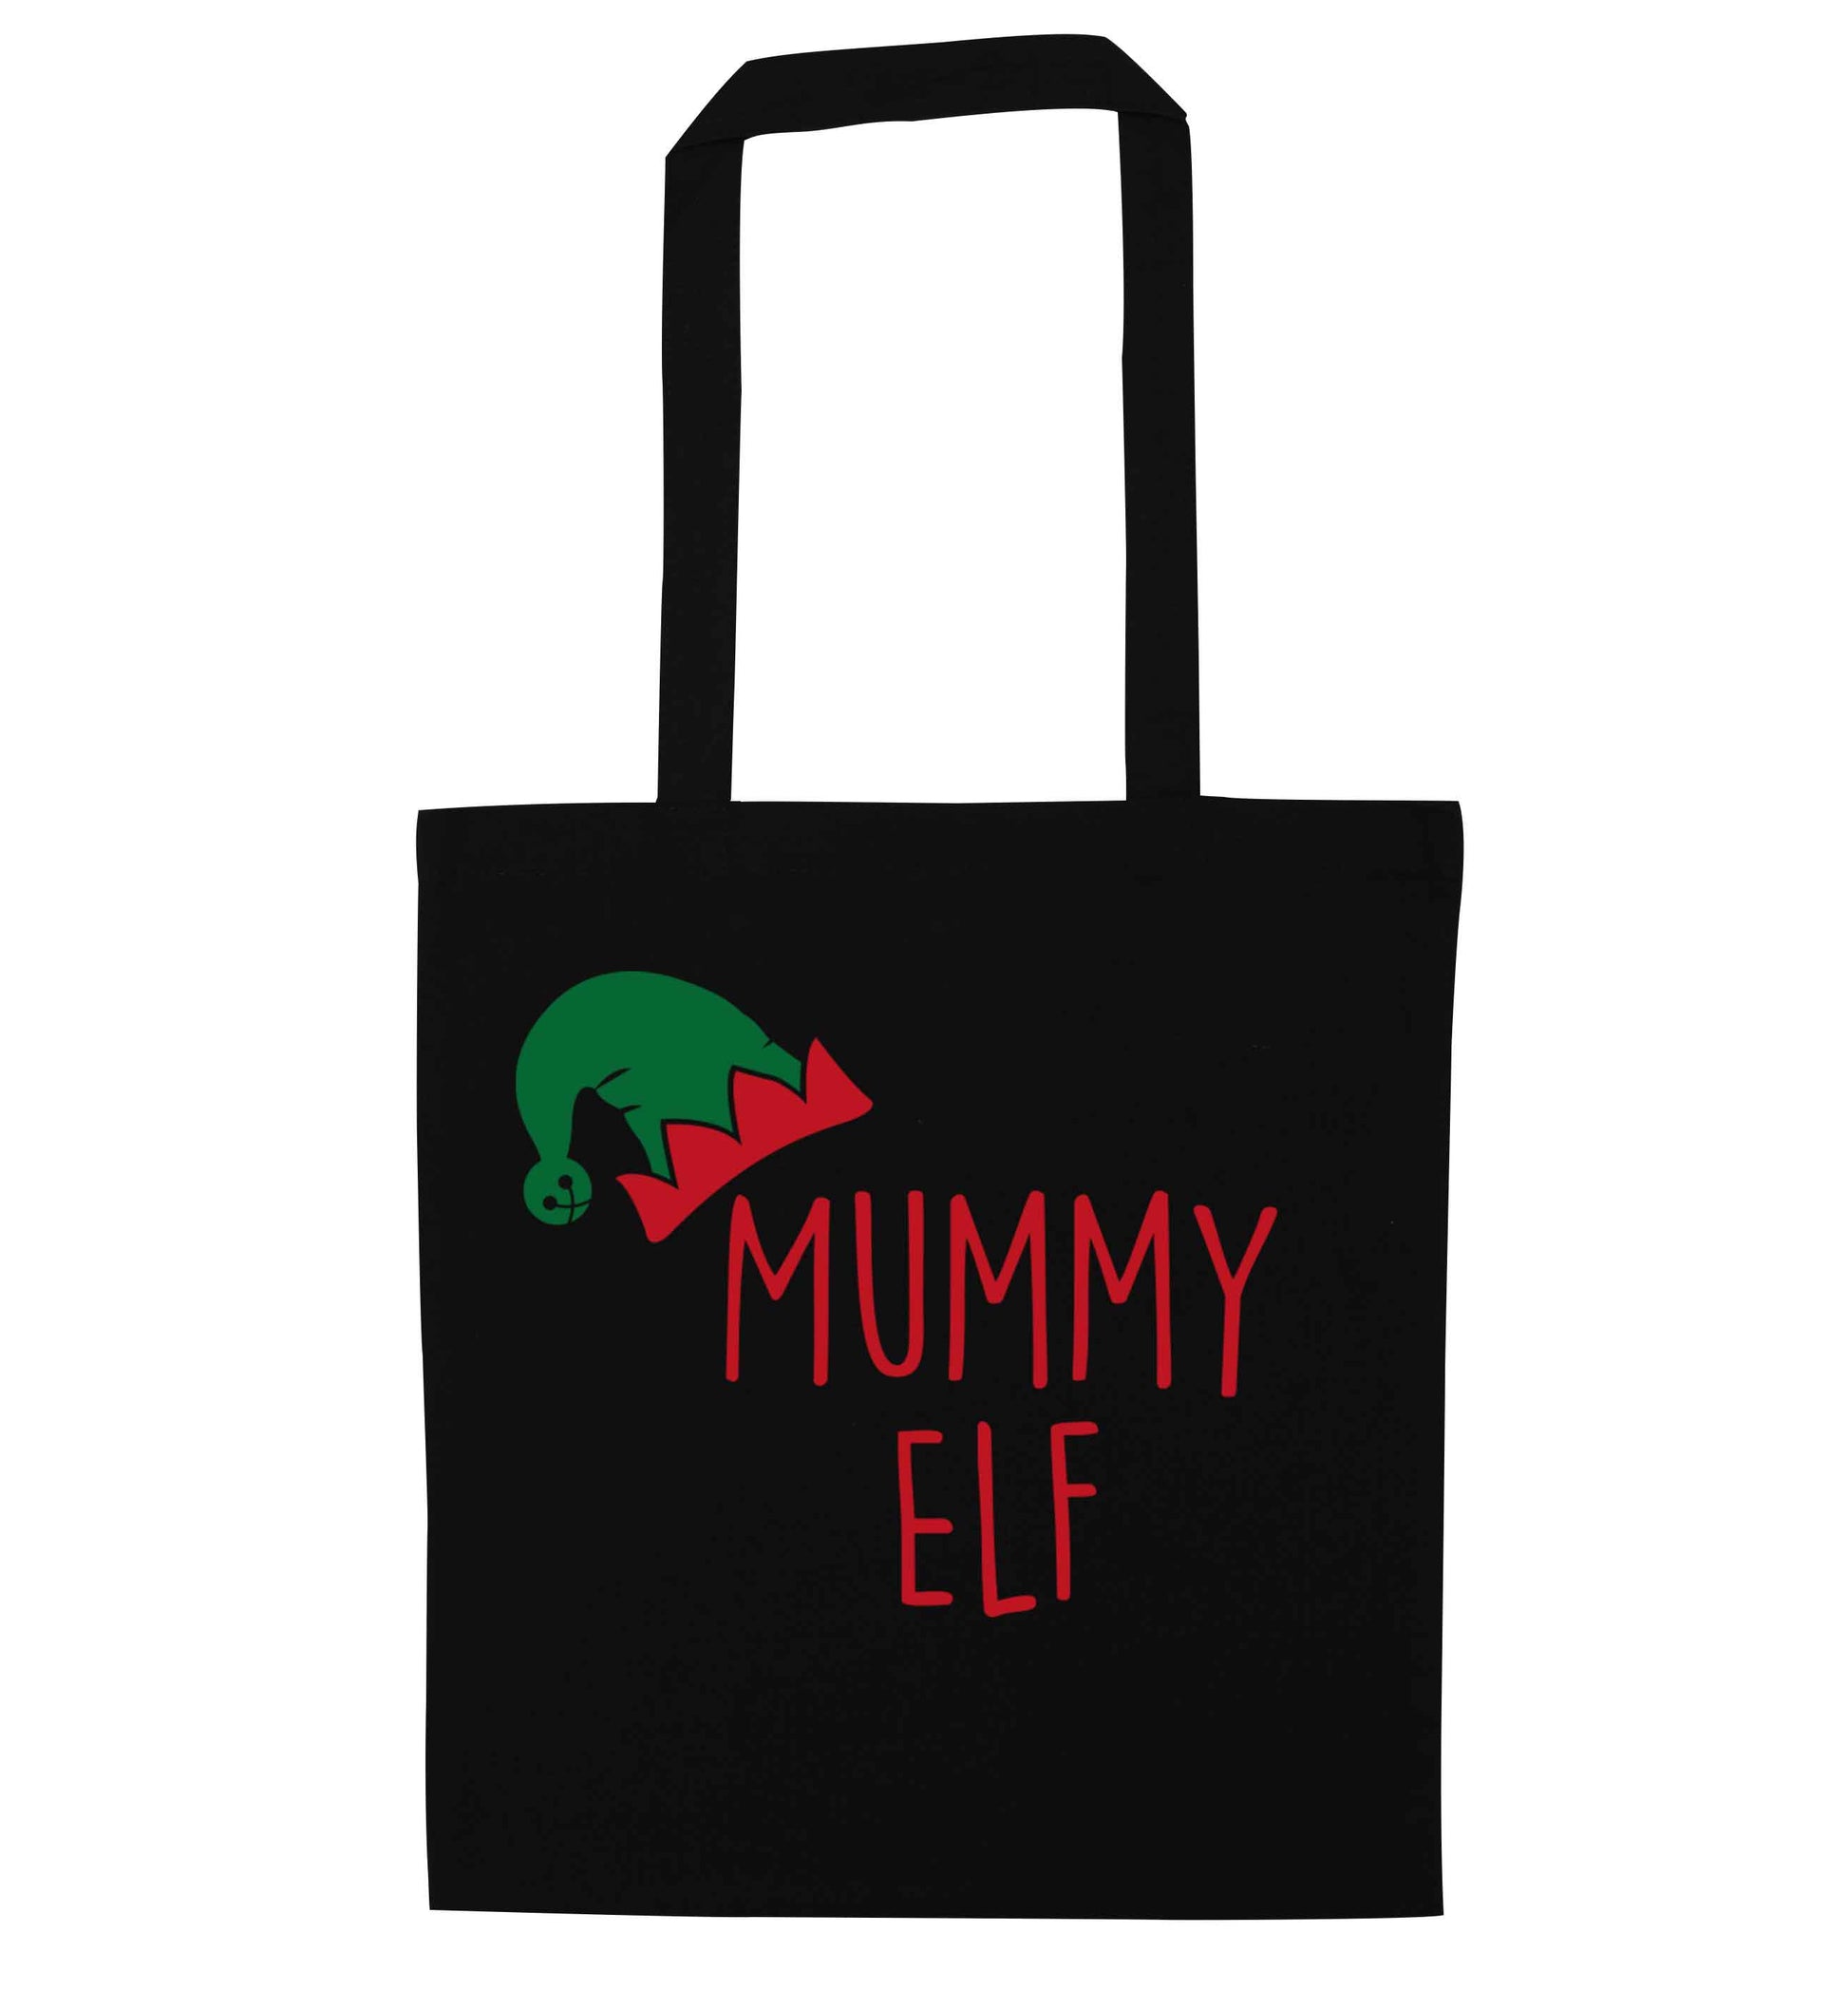 Mummy elf black tote bag